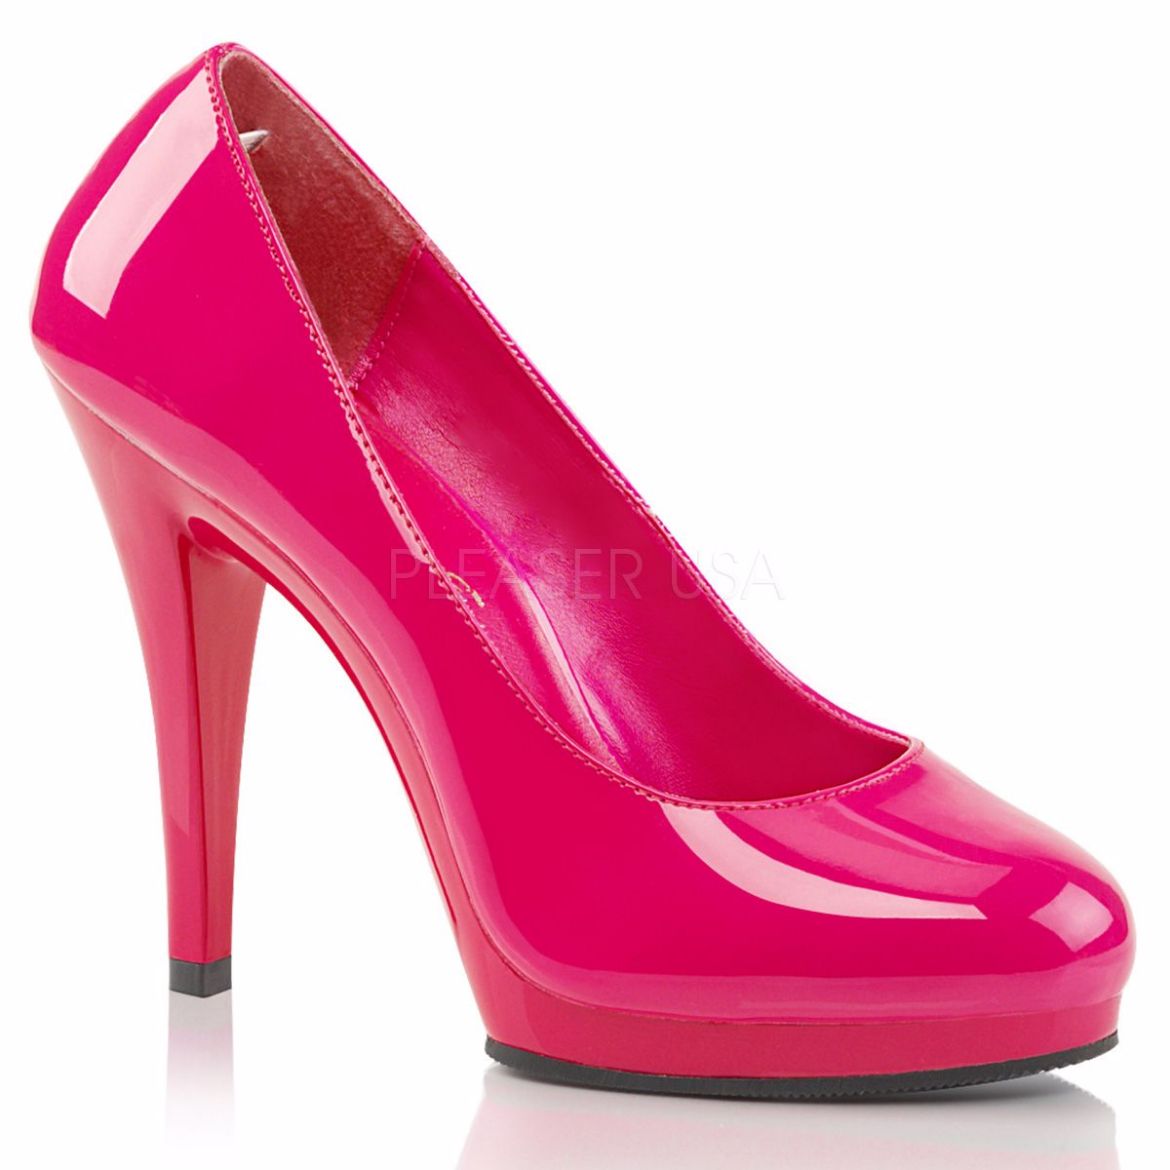 Liz Claiborne black high heels | Black high heels, High heels, 12 inch heels